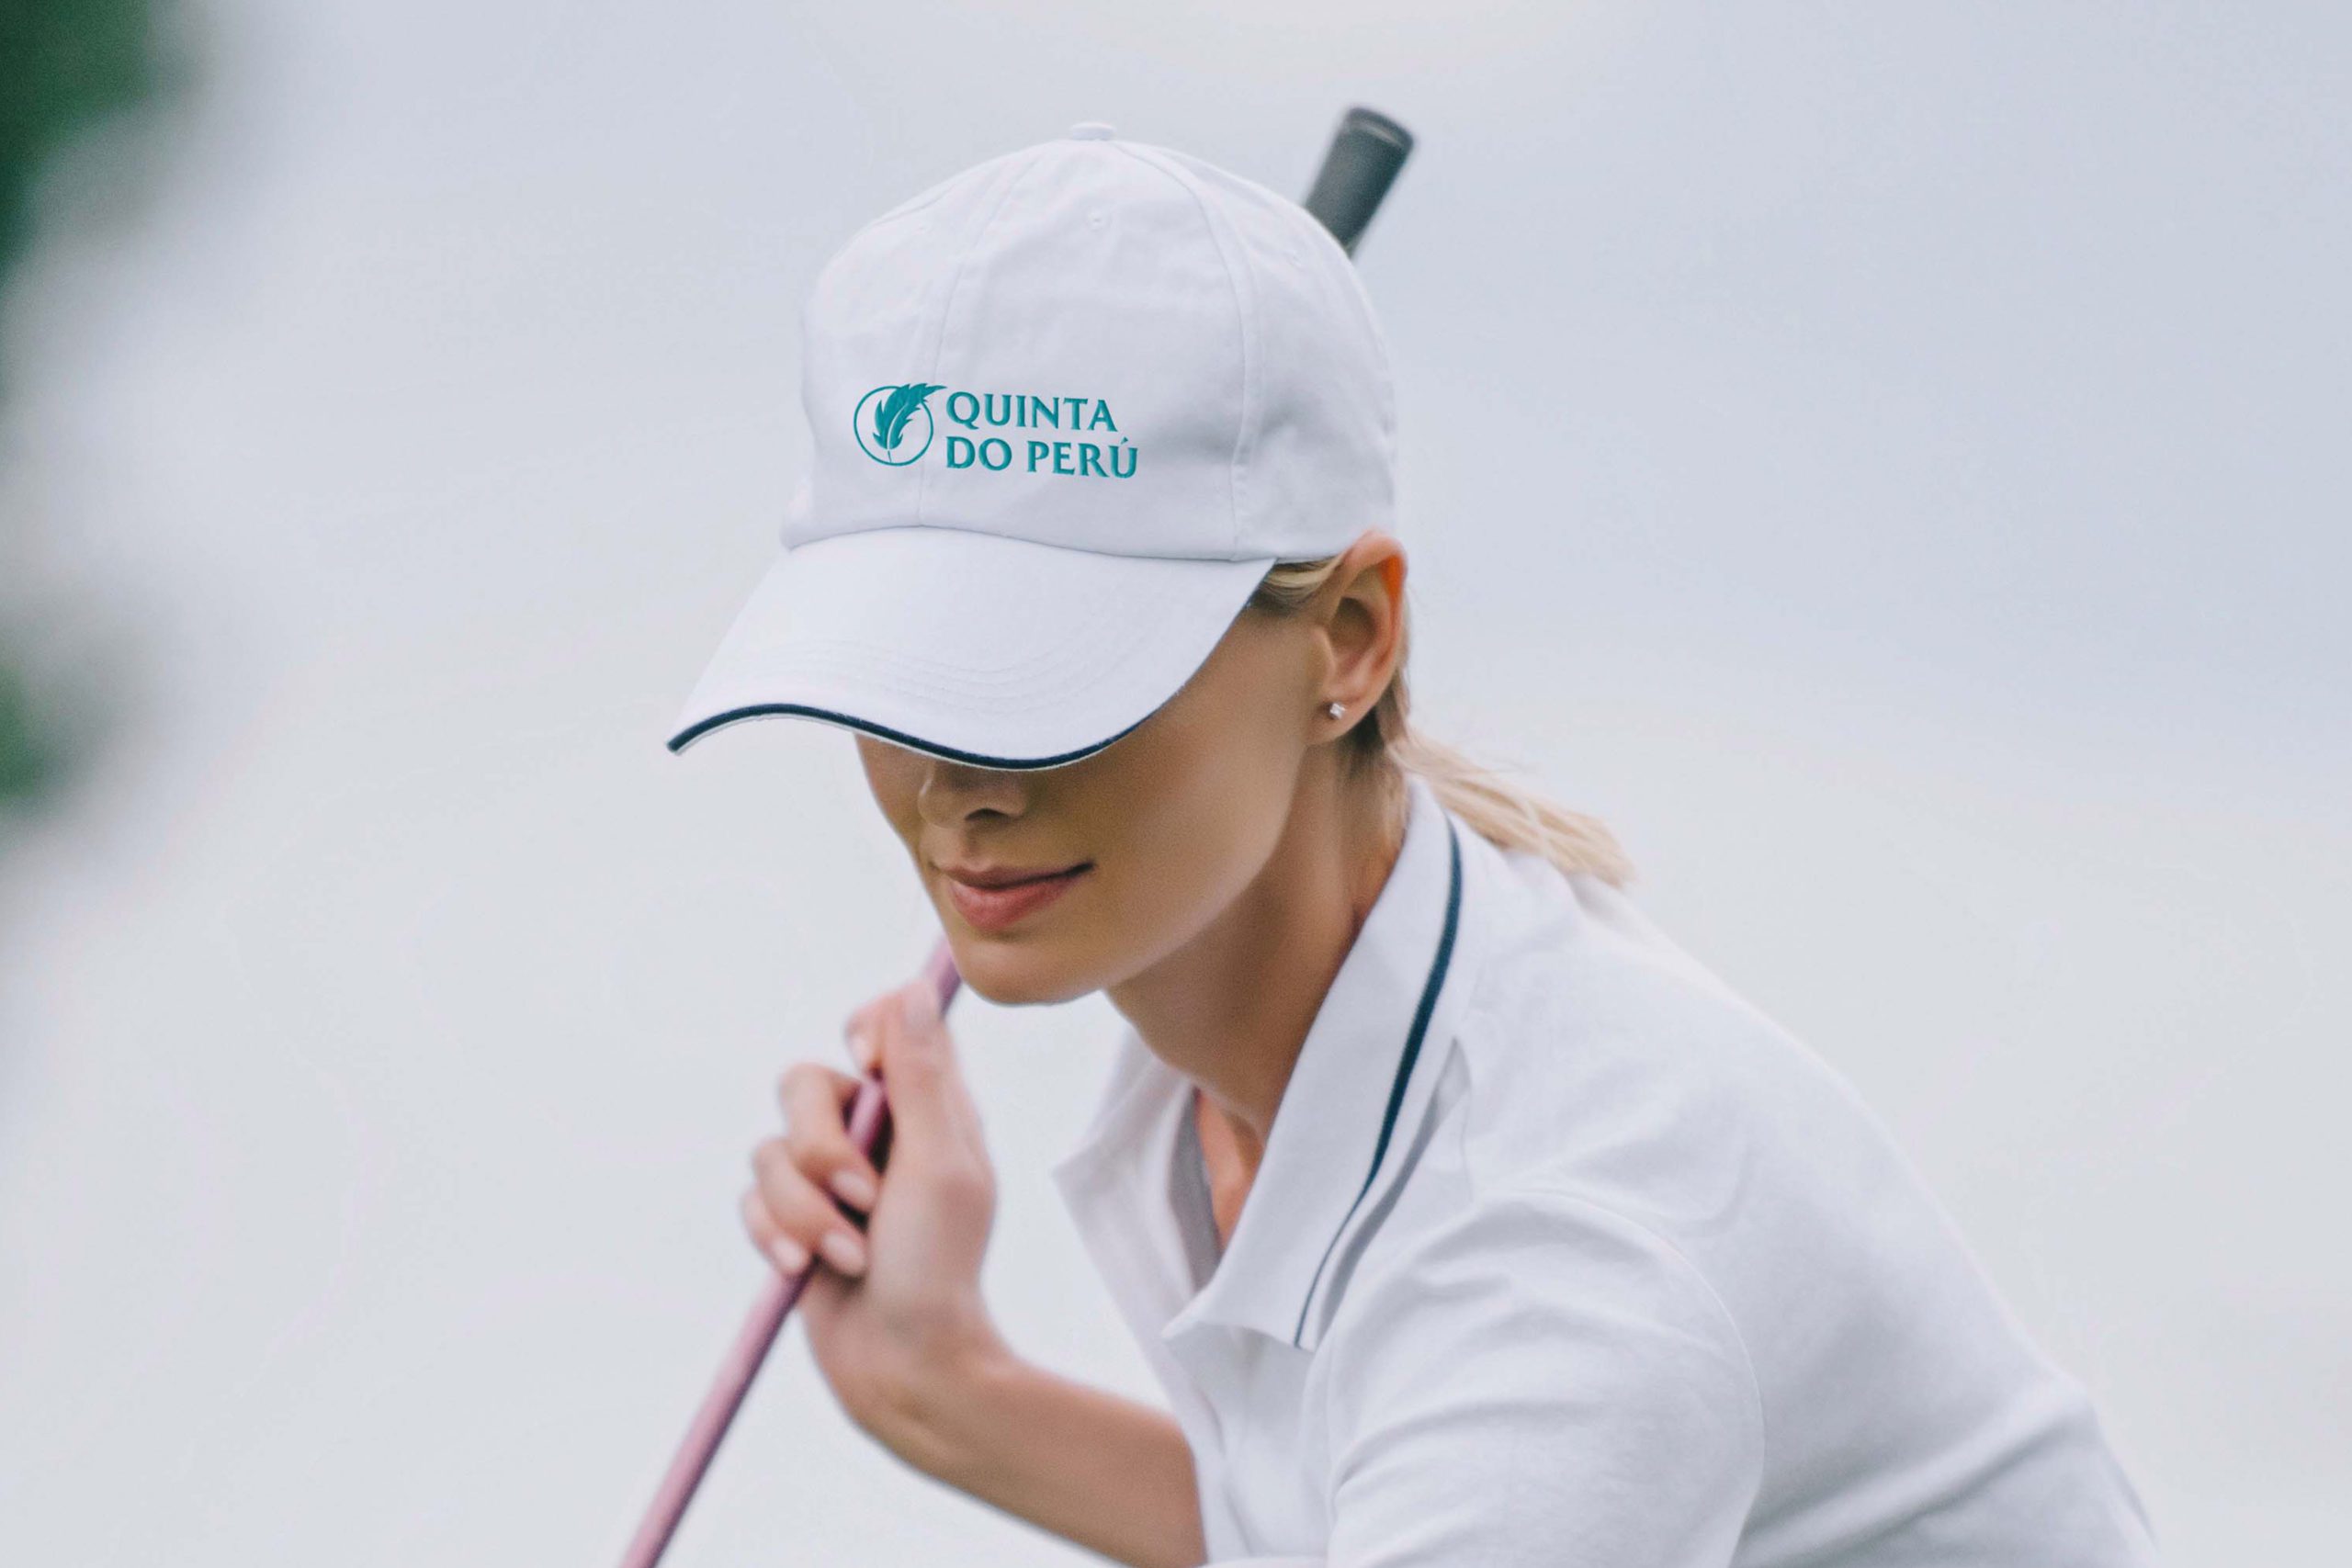 QDP Quinta Do Peru Golf & Country Club turquoise logo printed on golf cap worn by a female golfer